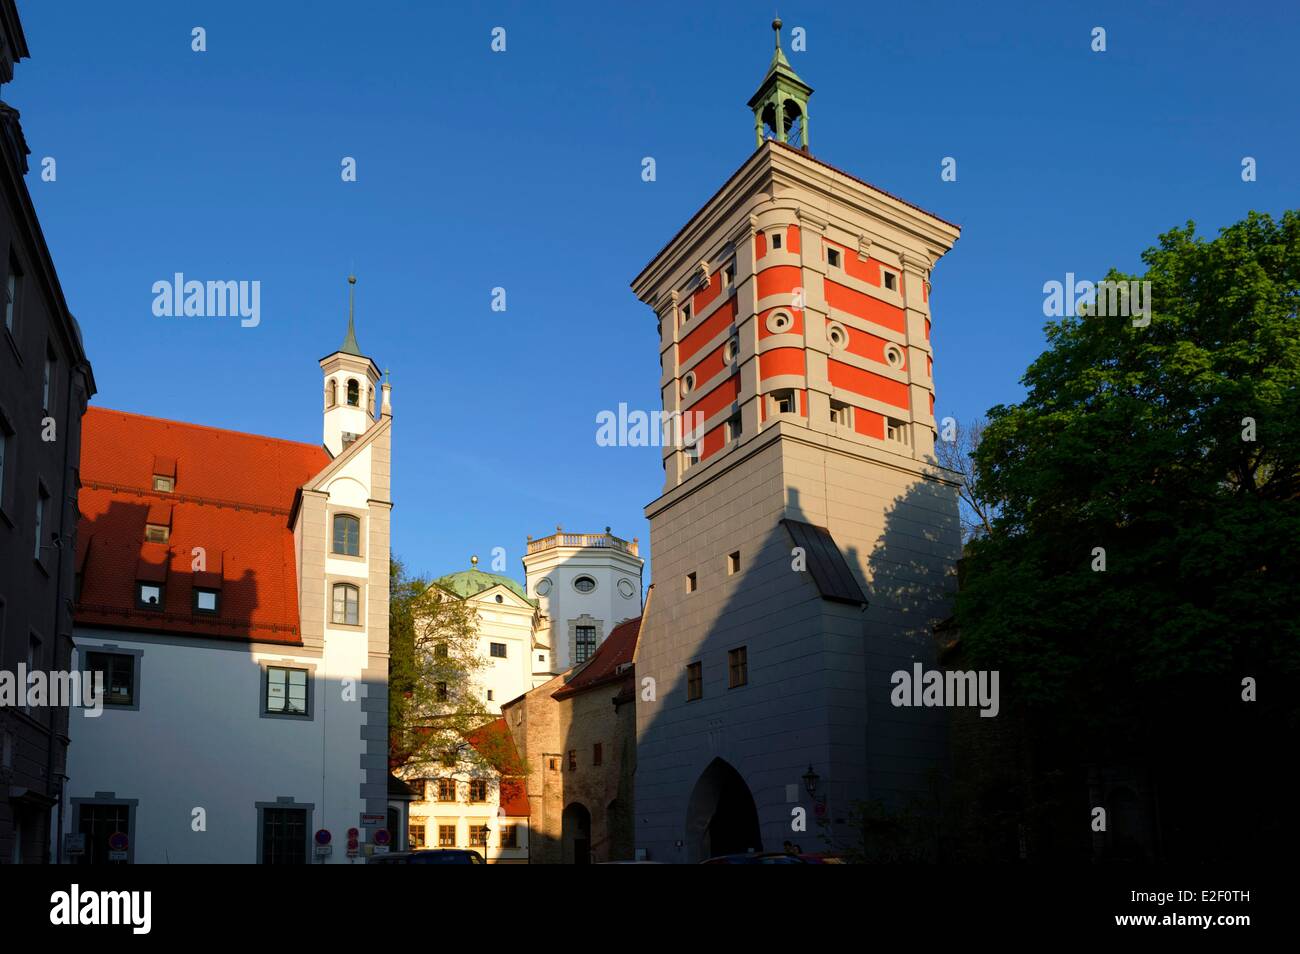 Alemania, Baviera, Augsburg, Rotes Tor (puerta roja) Foto de stock